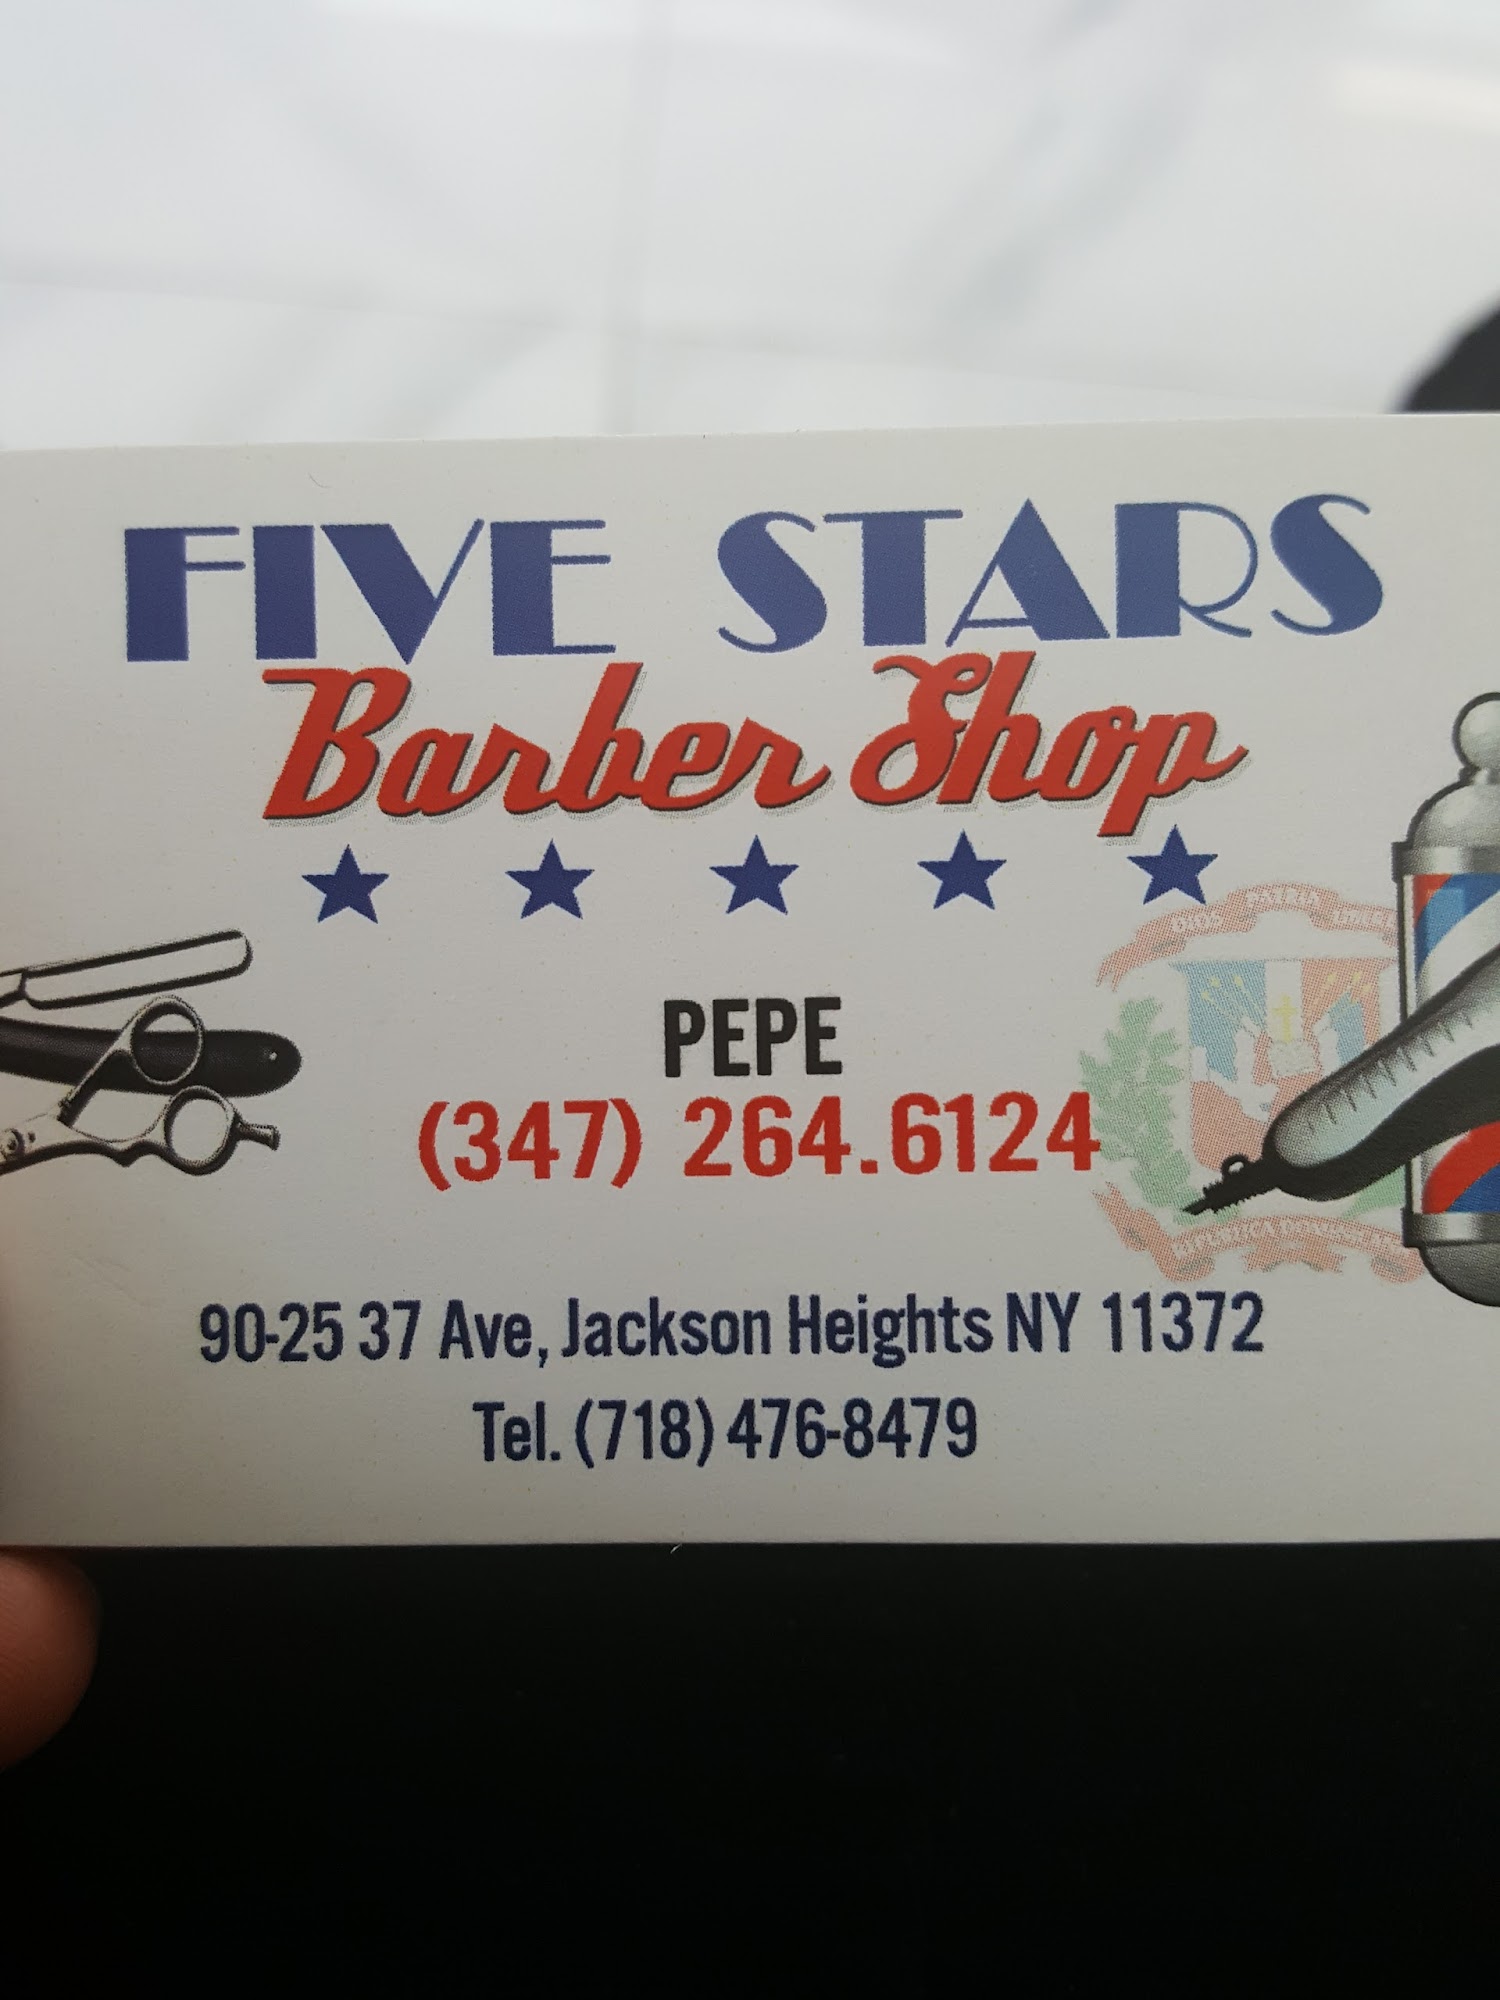 Five Star Barbershop